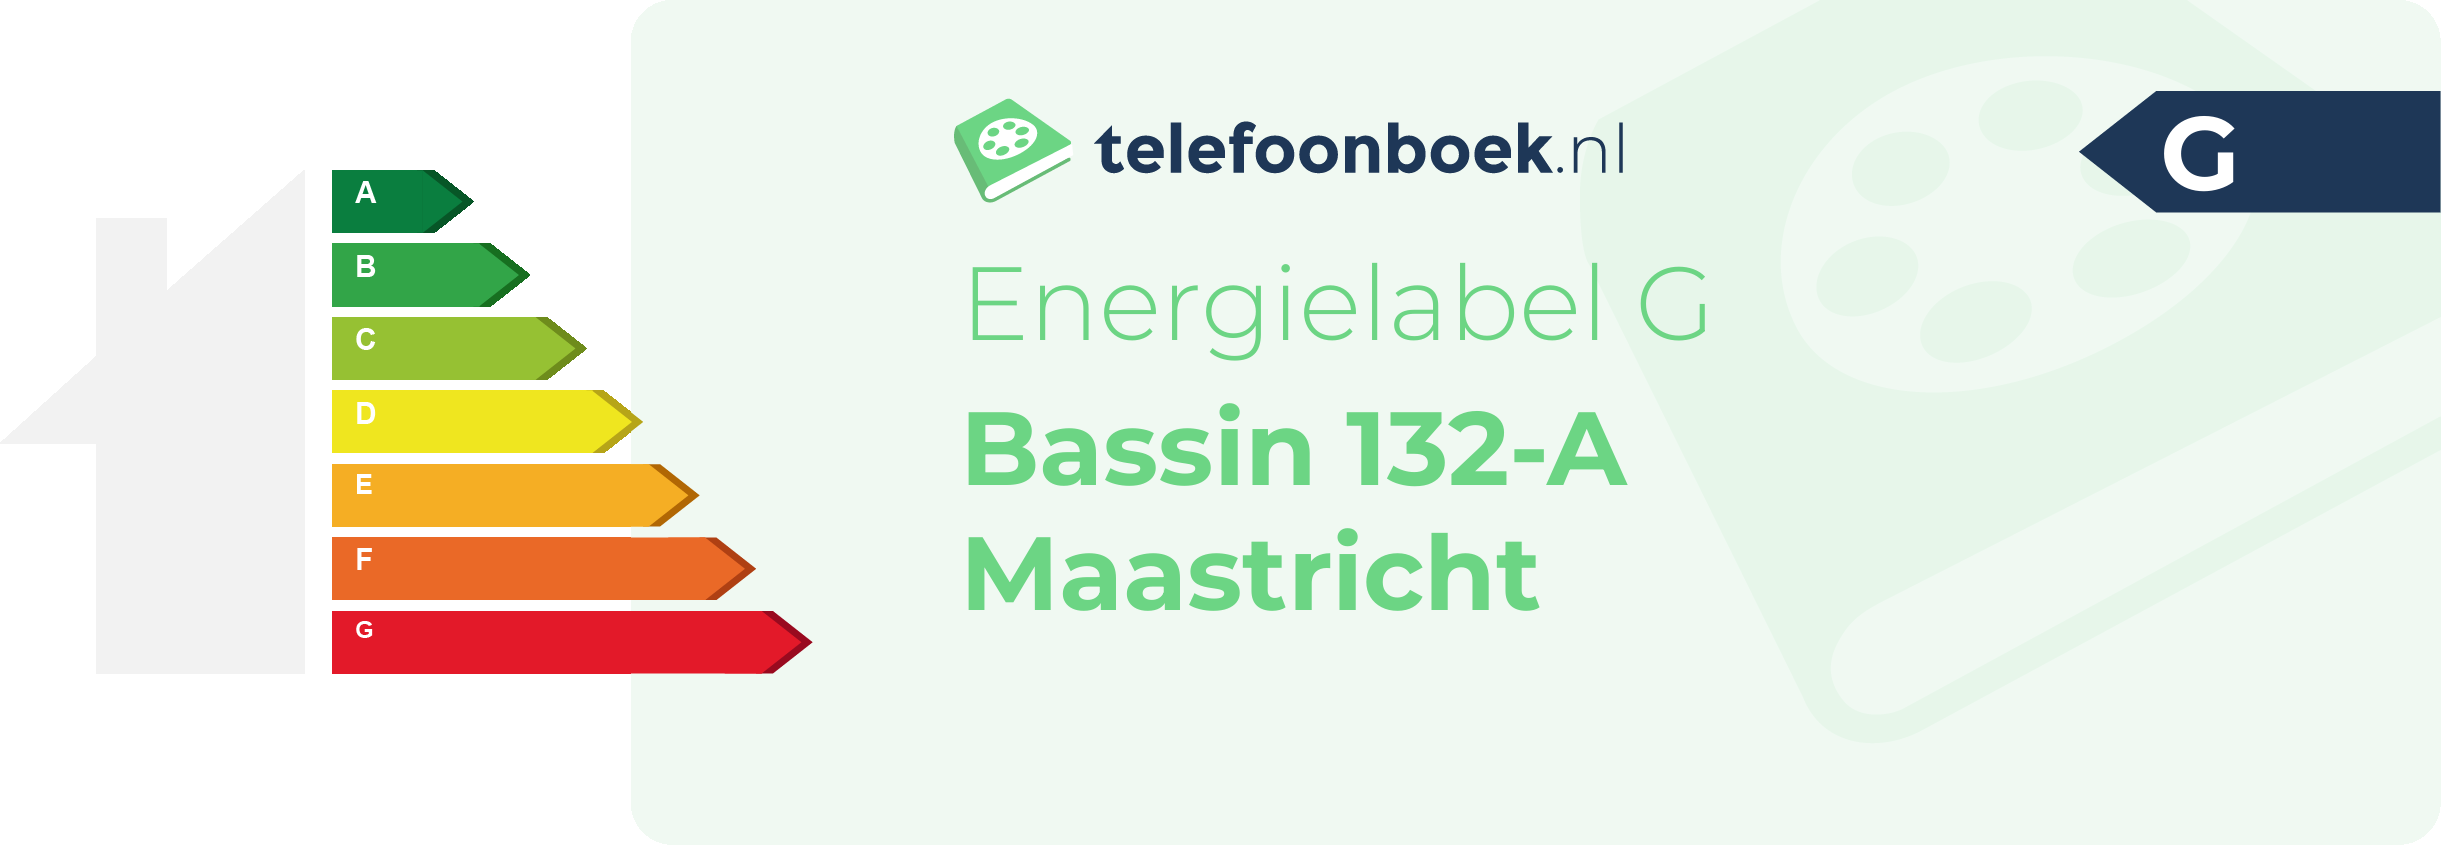 Energielabel Bassin 132-A Maastricht